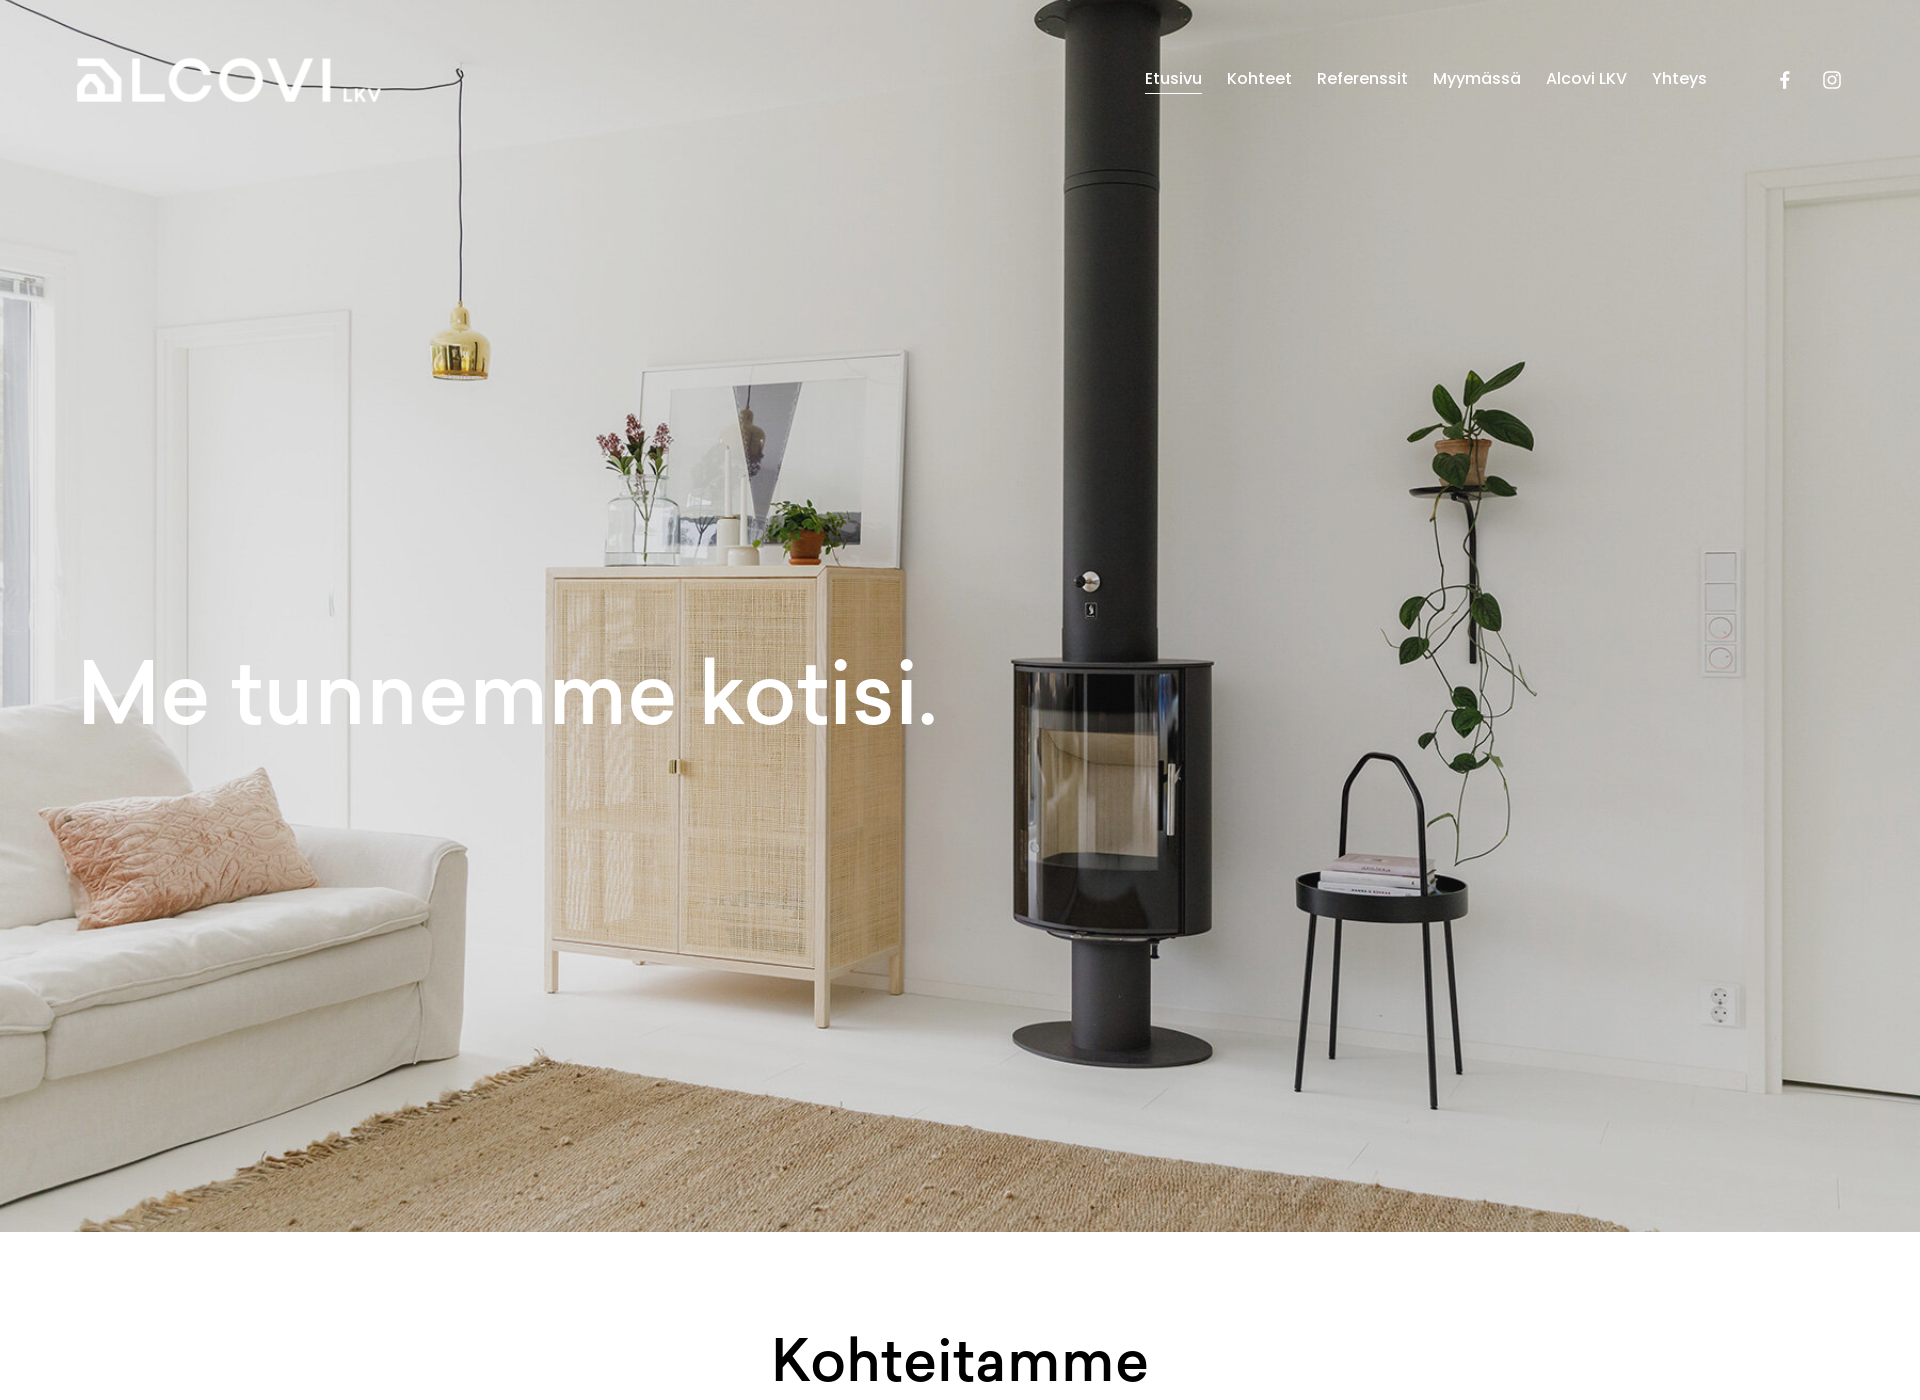 Screenshot for alcovi.fi